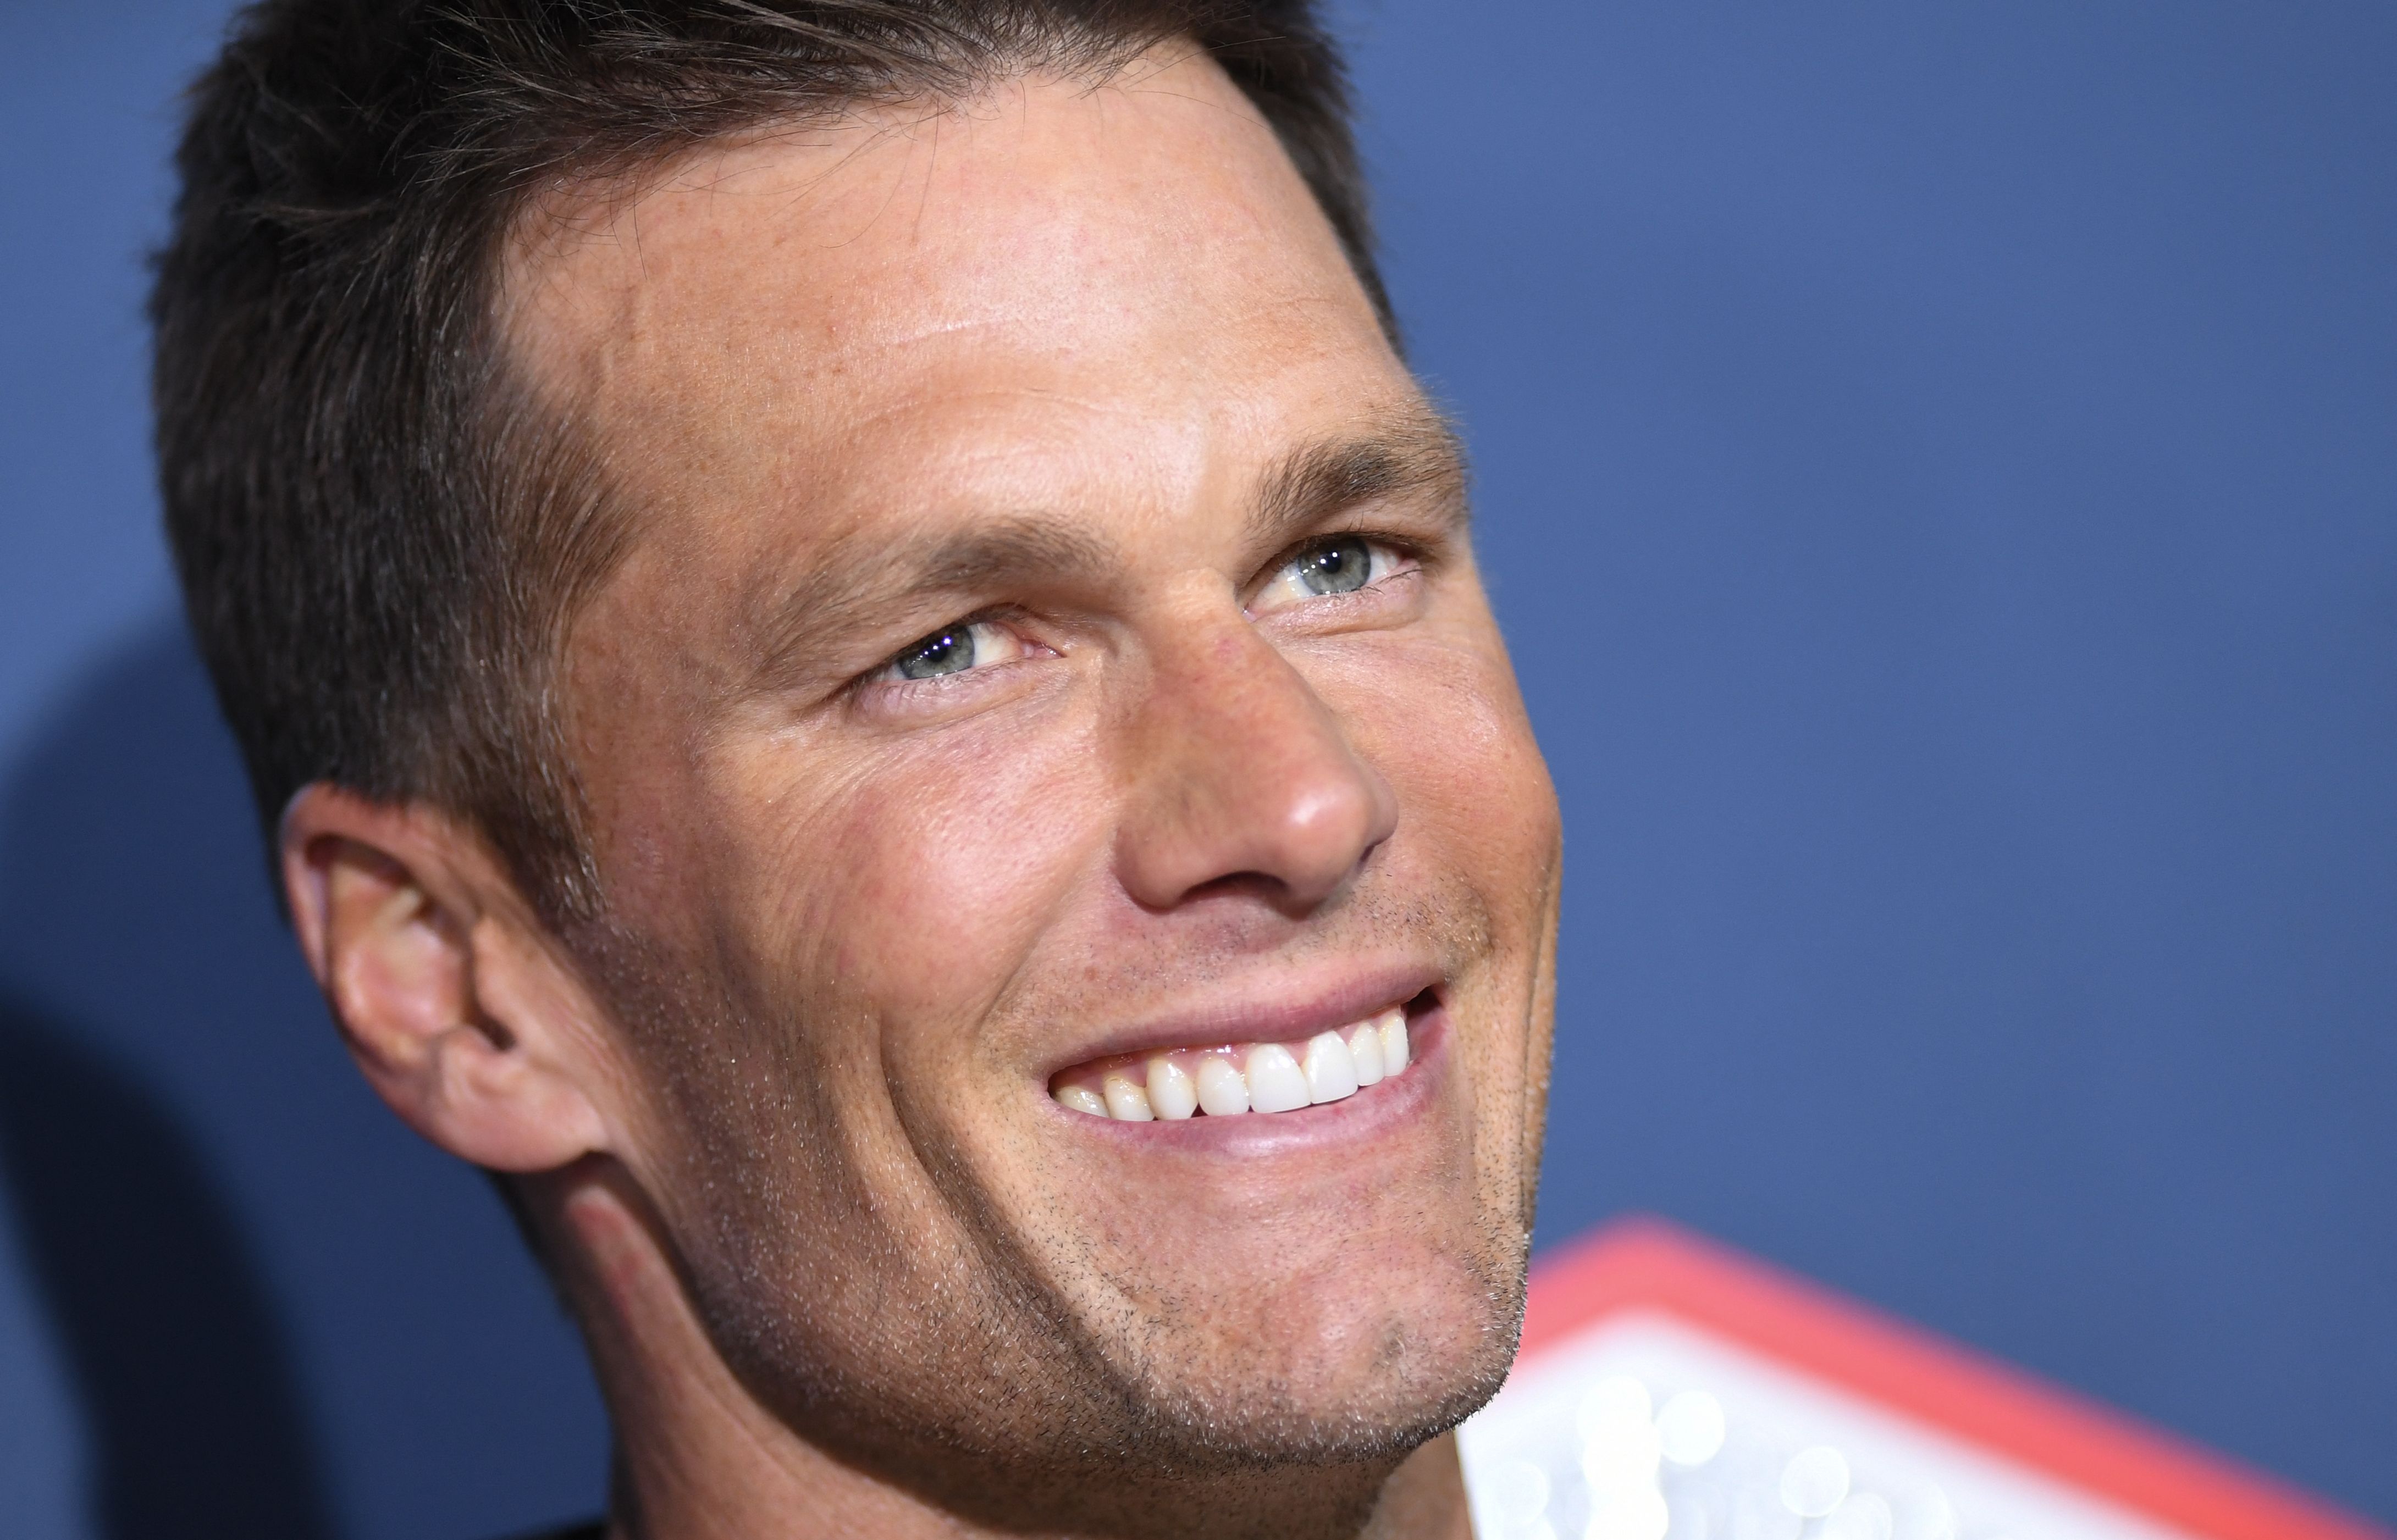 La estrella de la NFL, Tom Brady, anunció su retiro definitivo. (Foto Prensa Libre: AFP)